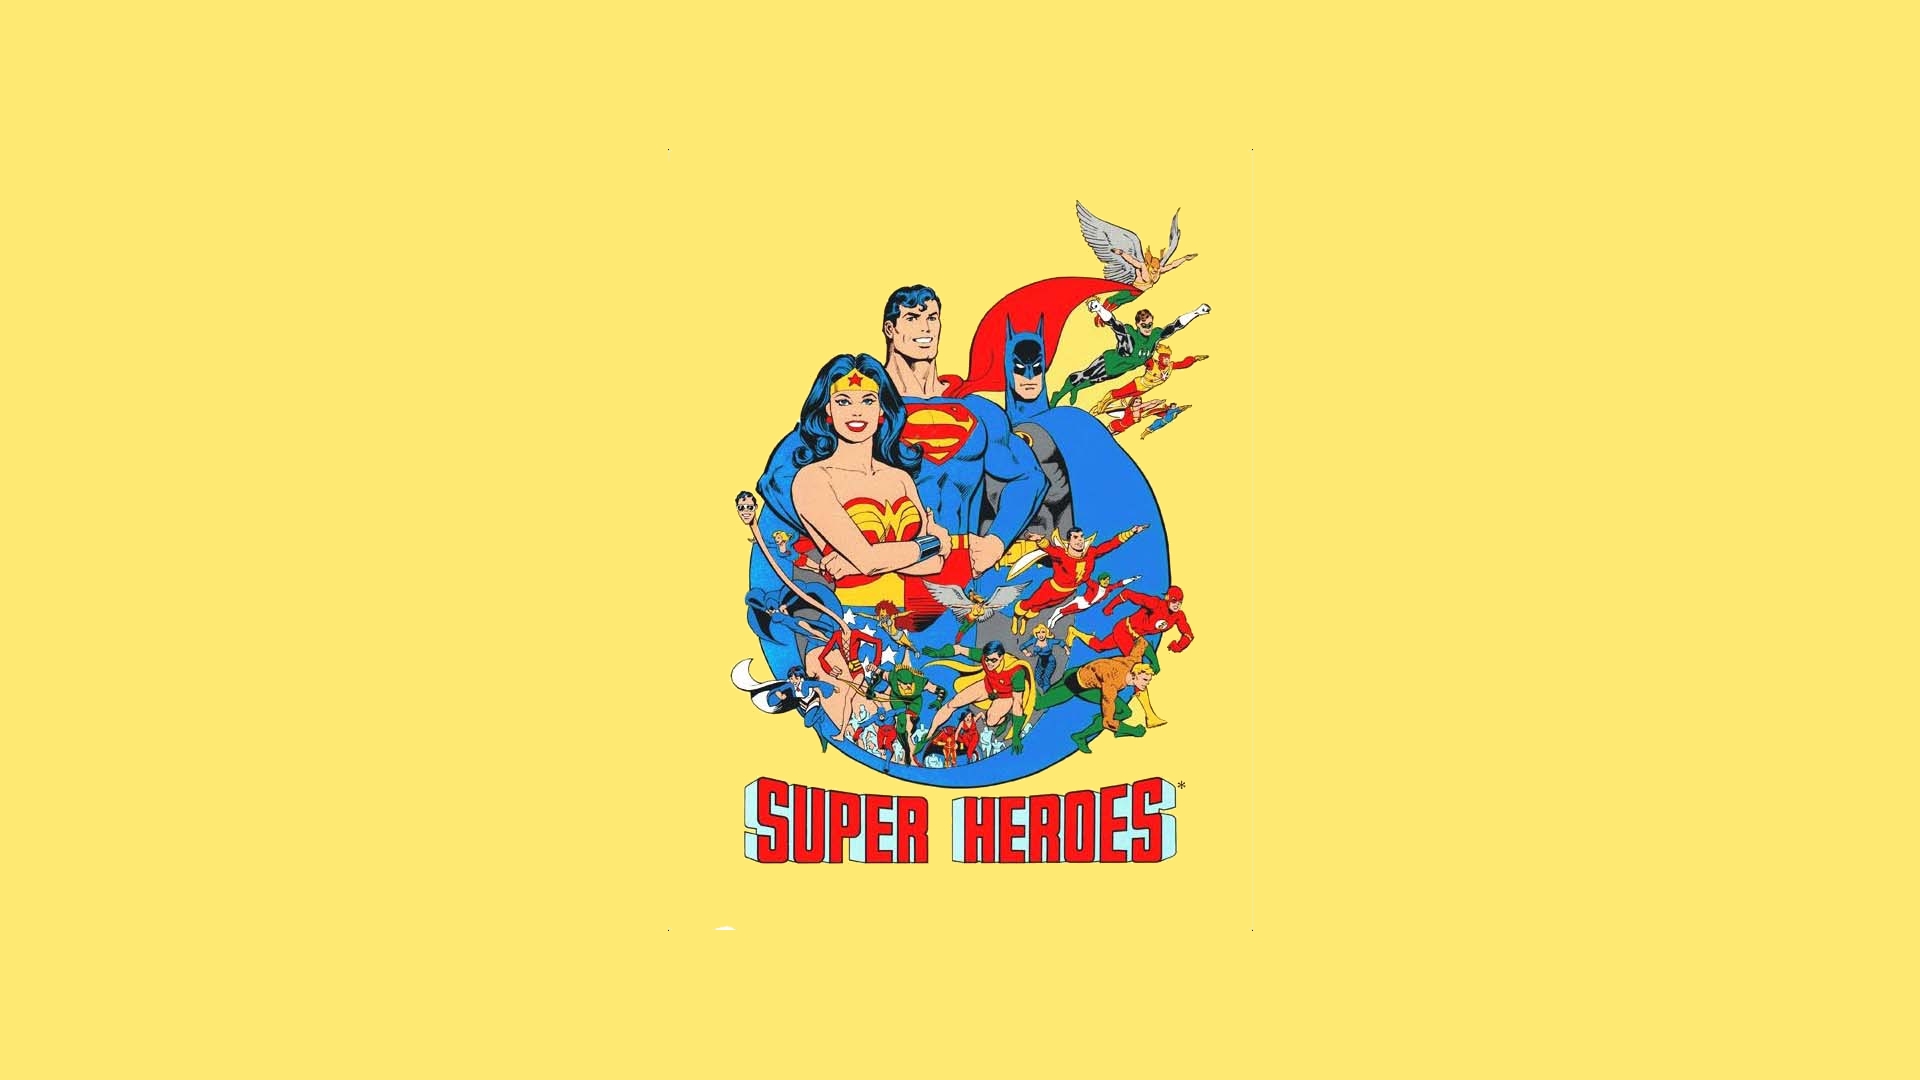 Wonder Woman Superman Batman Shazam DC Comics Flash Green Lantern Robin DC Comics Plastic Man Hawkma 1920x1080